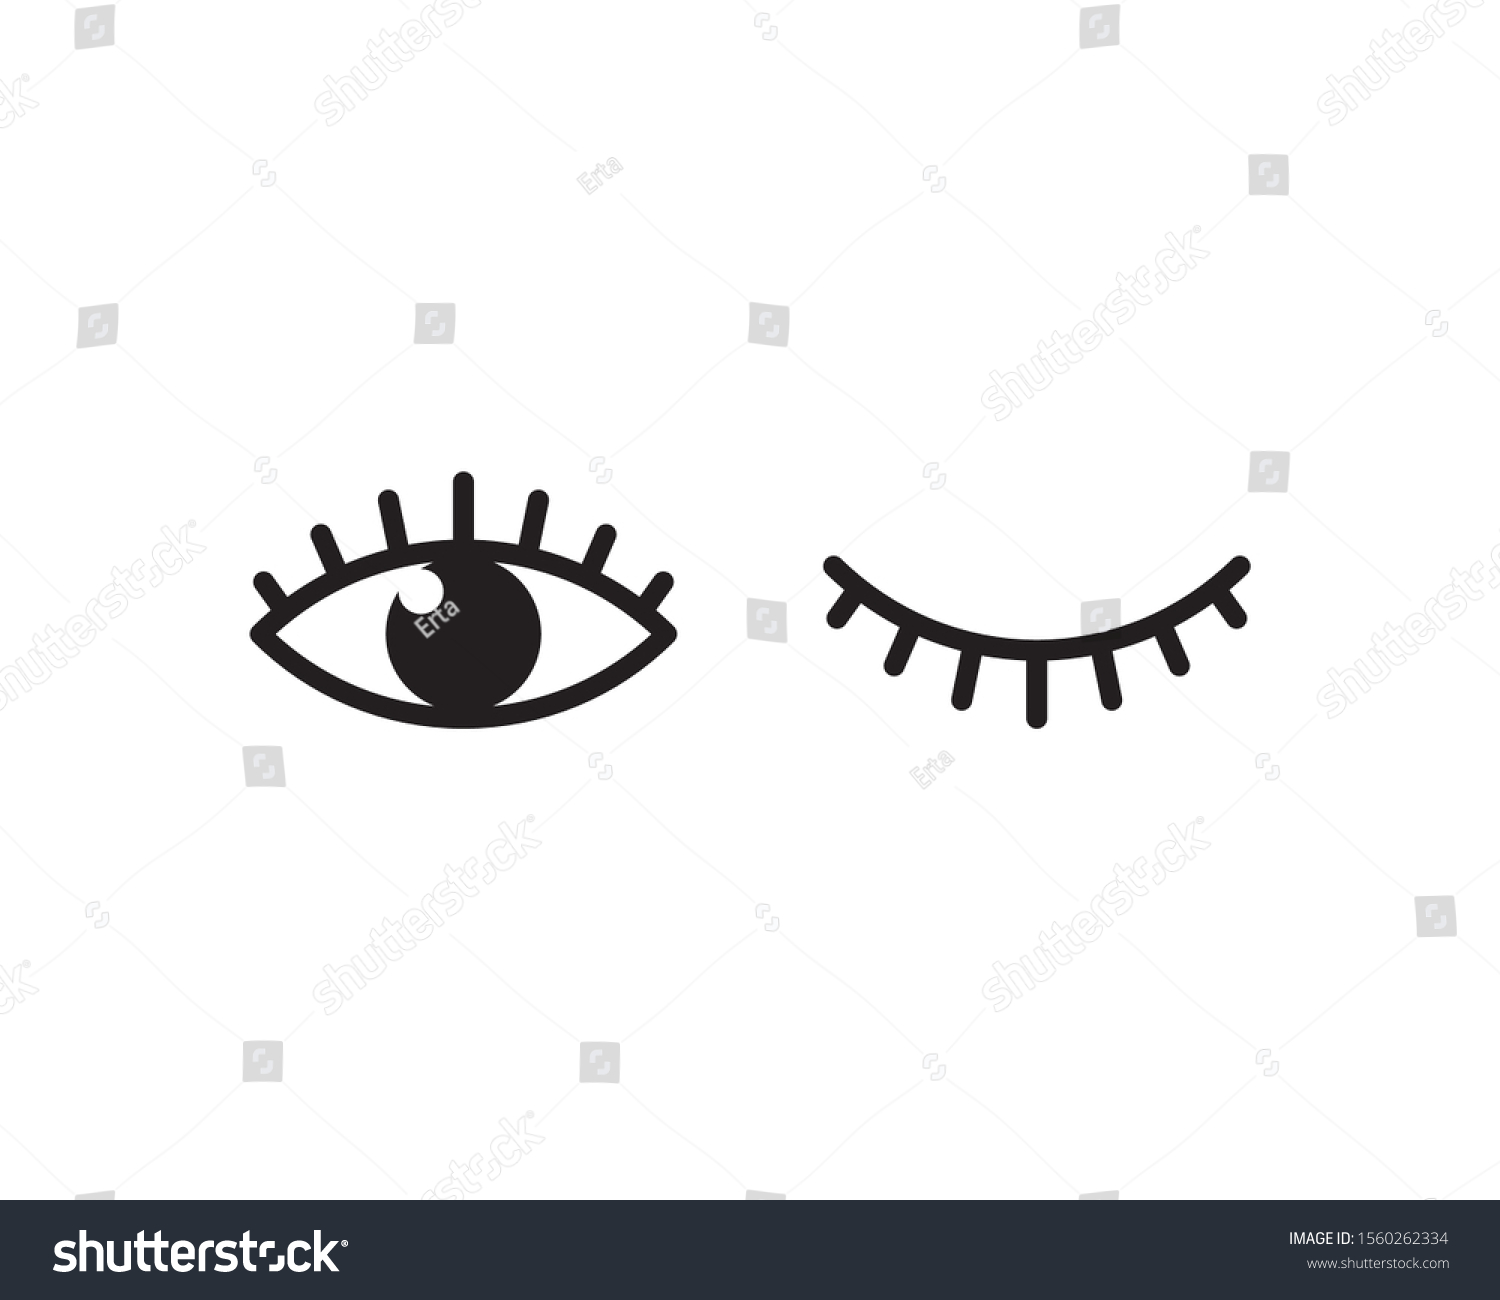 SVG of eyes and eyelashes icon design. vector illustration  svg